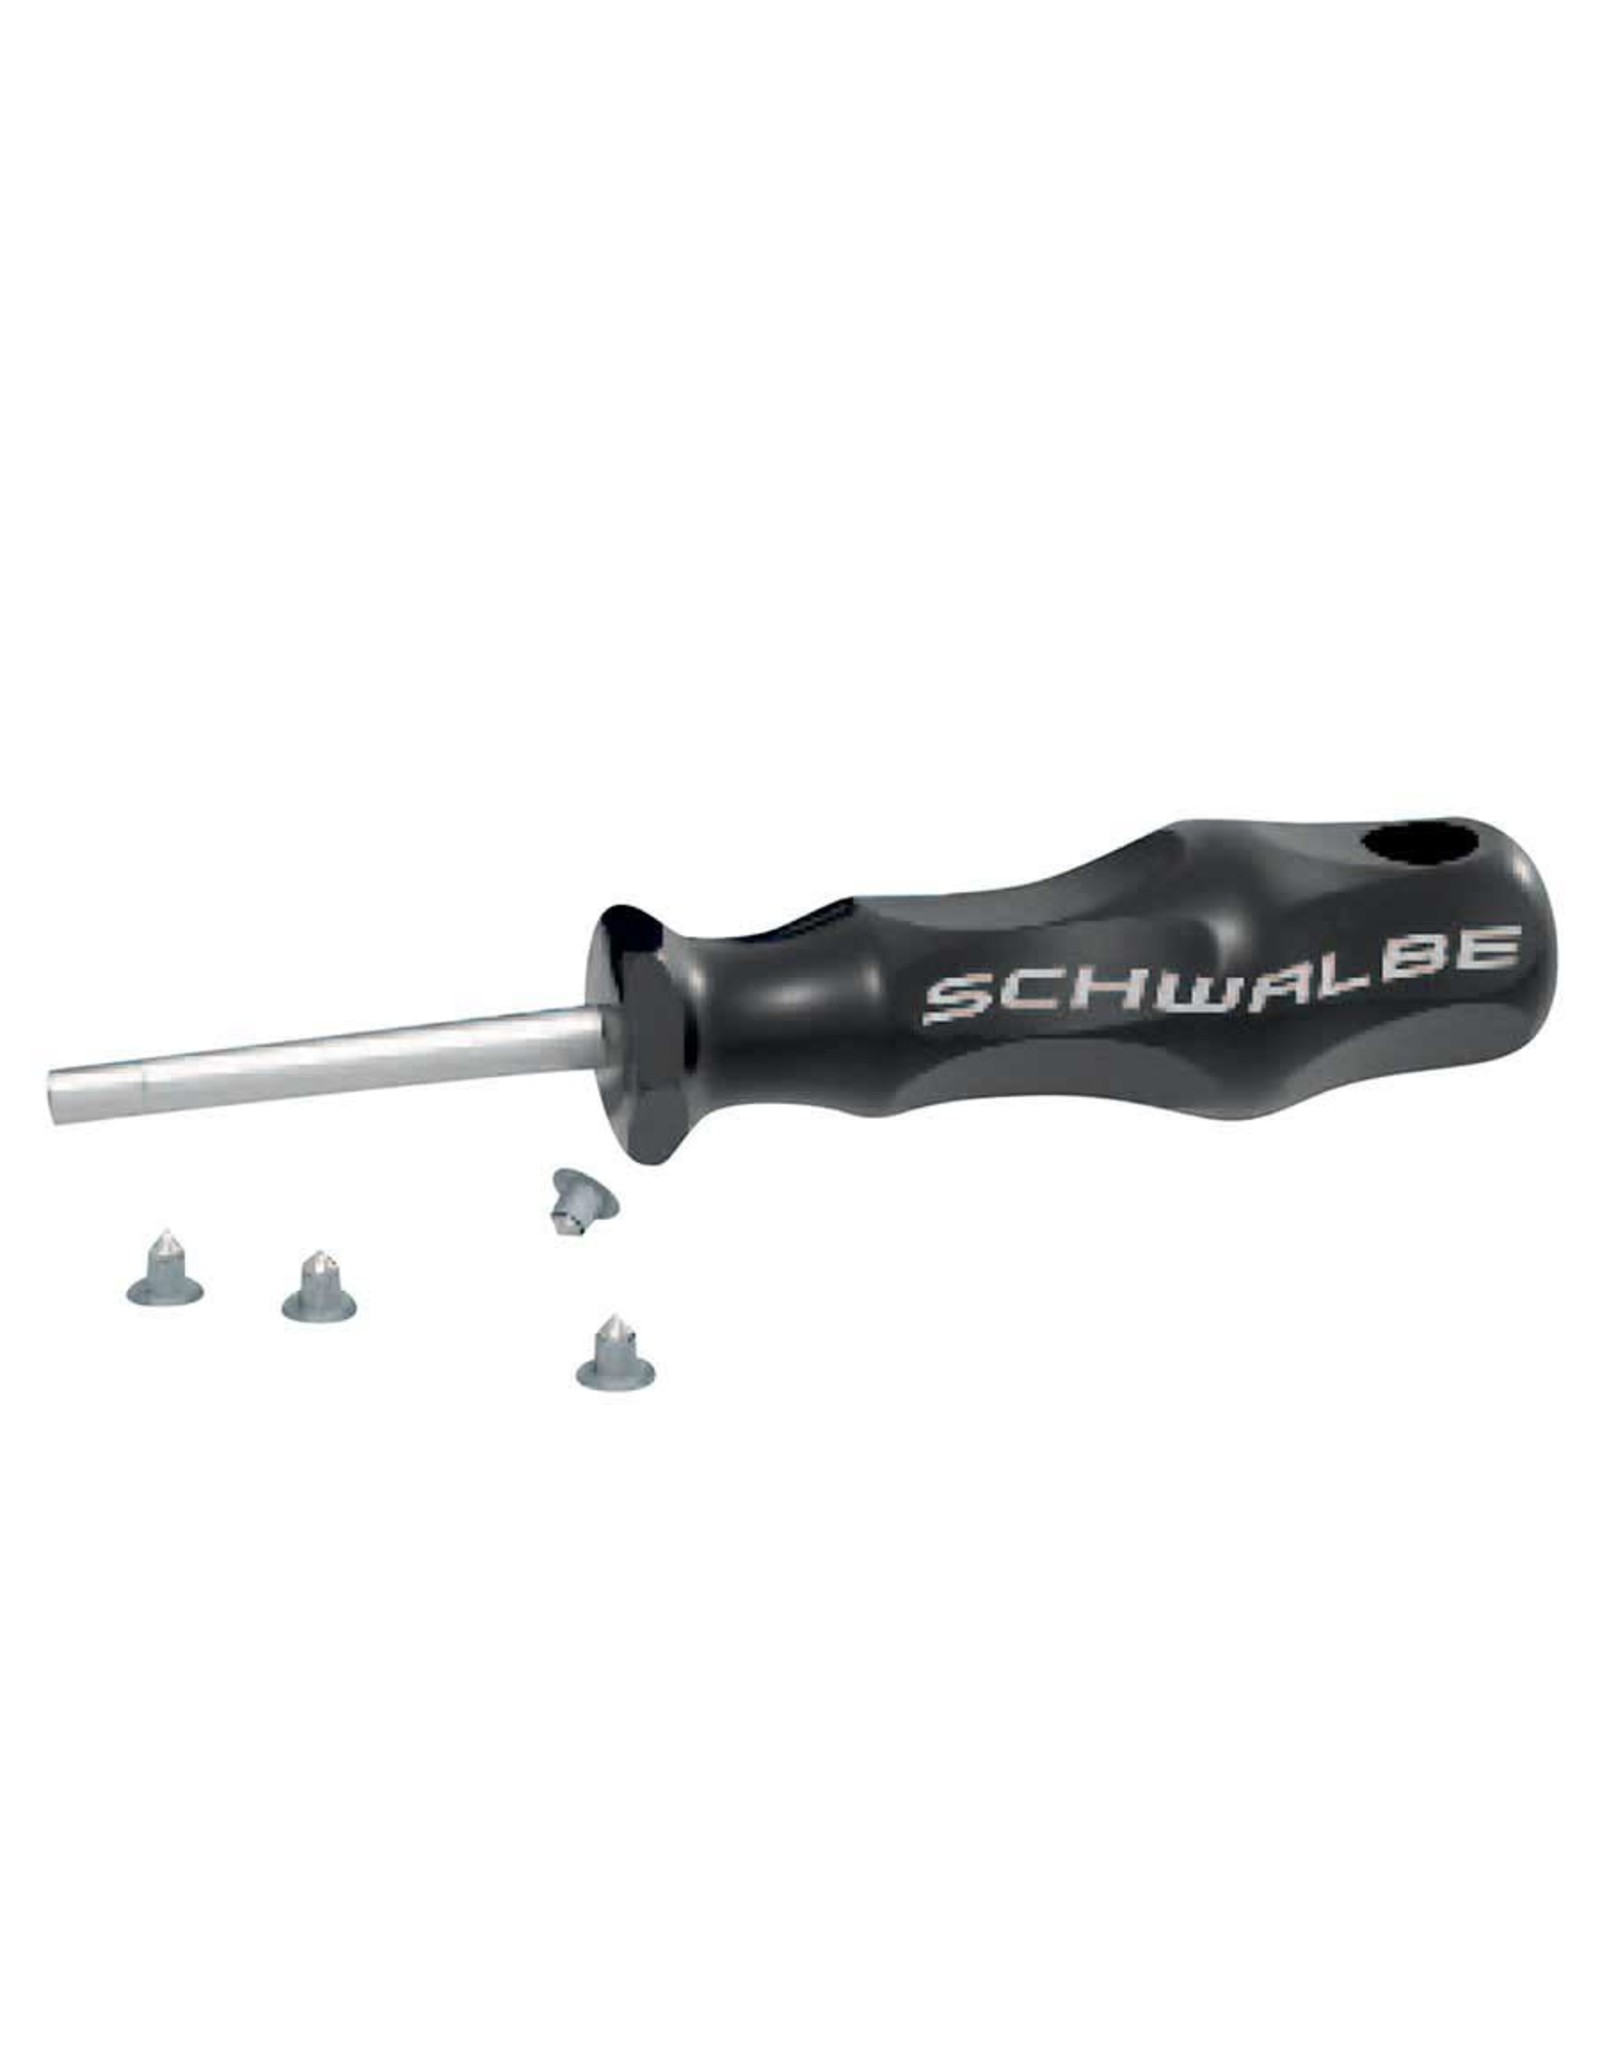 Schwalbe Schwalbe 50 studs with tool